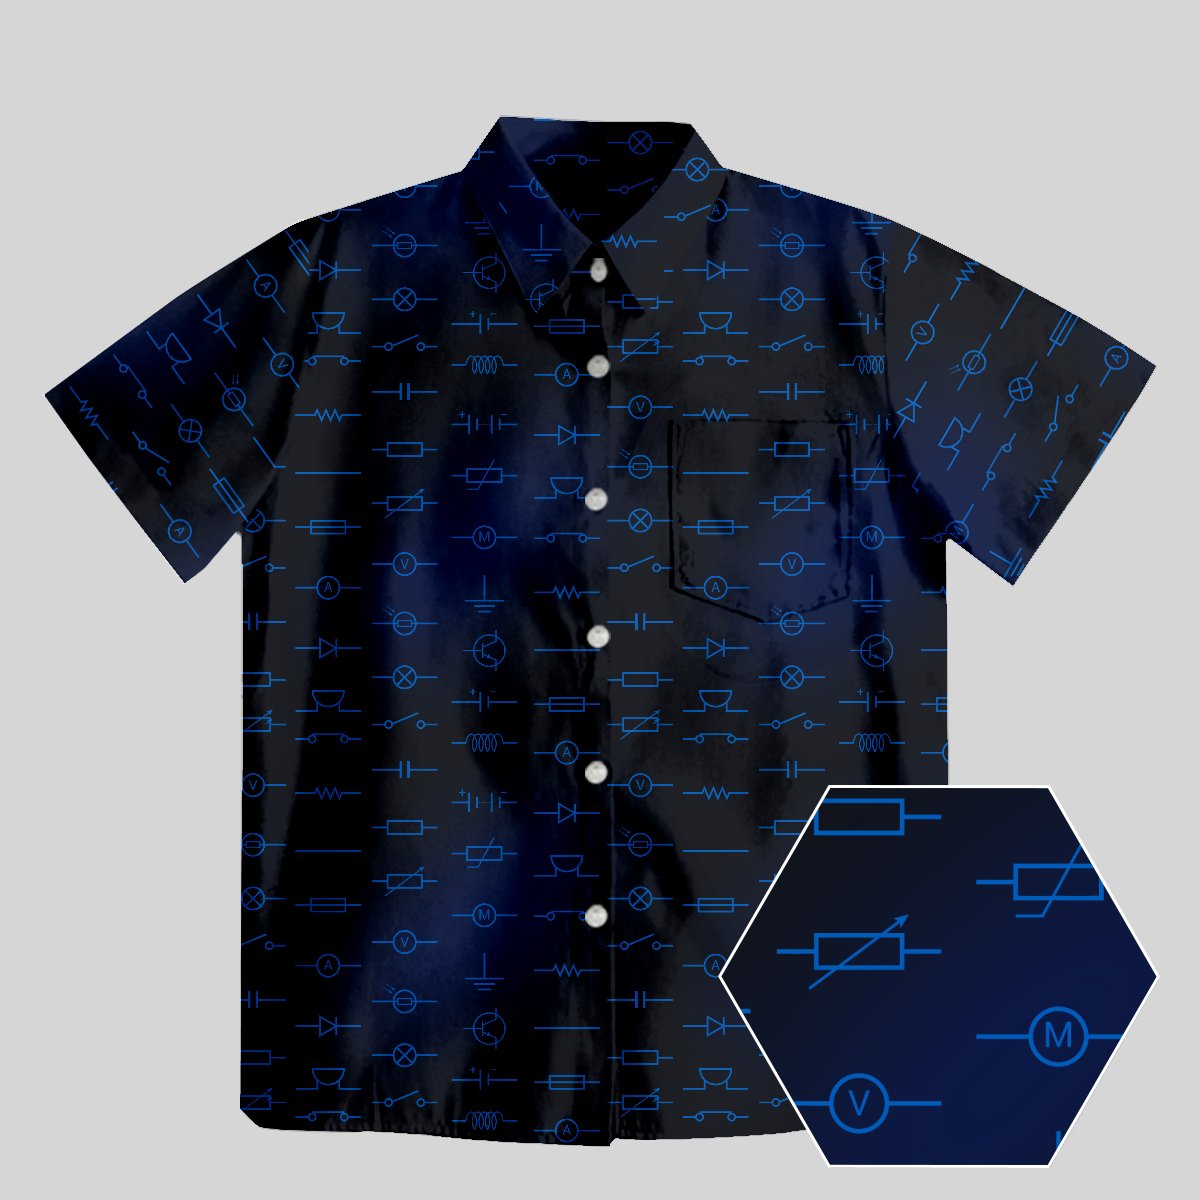 Electronic Component Black Button Up Pocket Shirt - Geeksoutfit